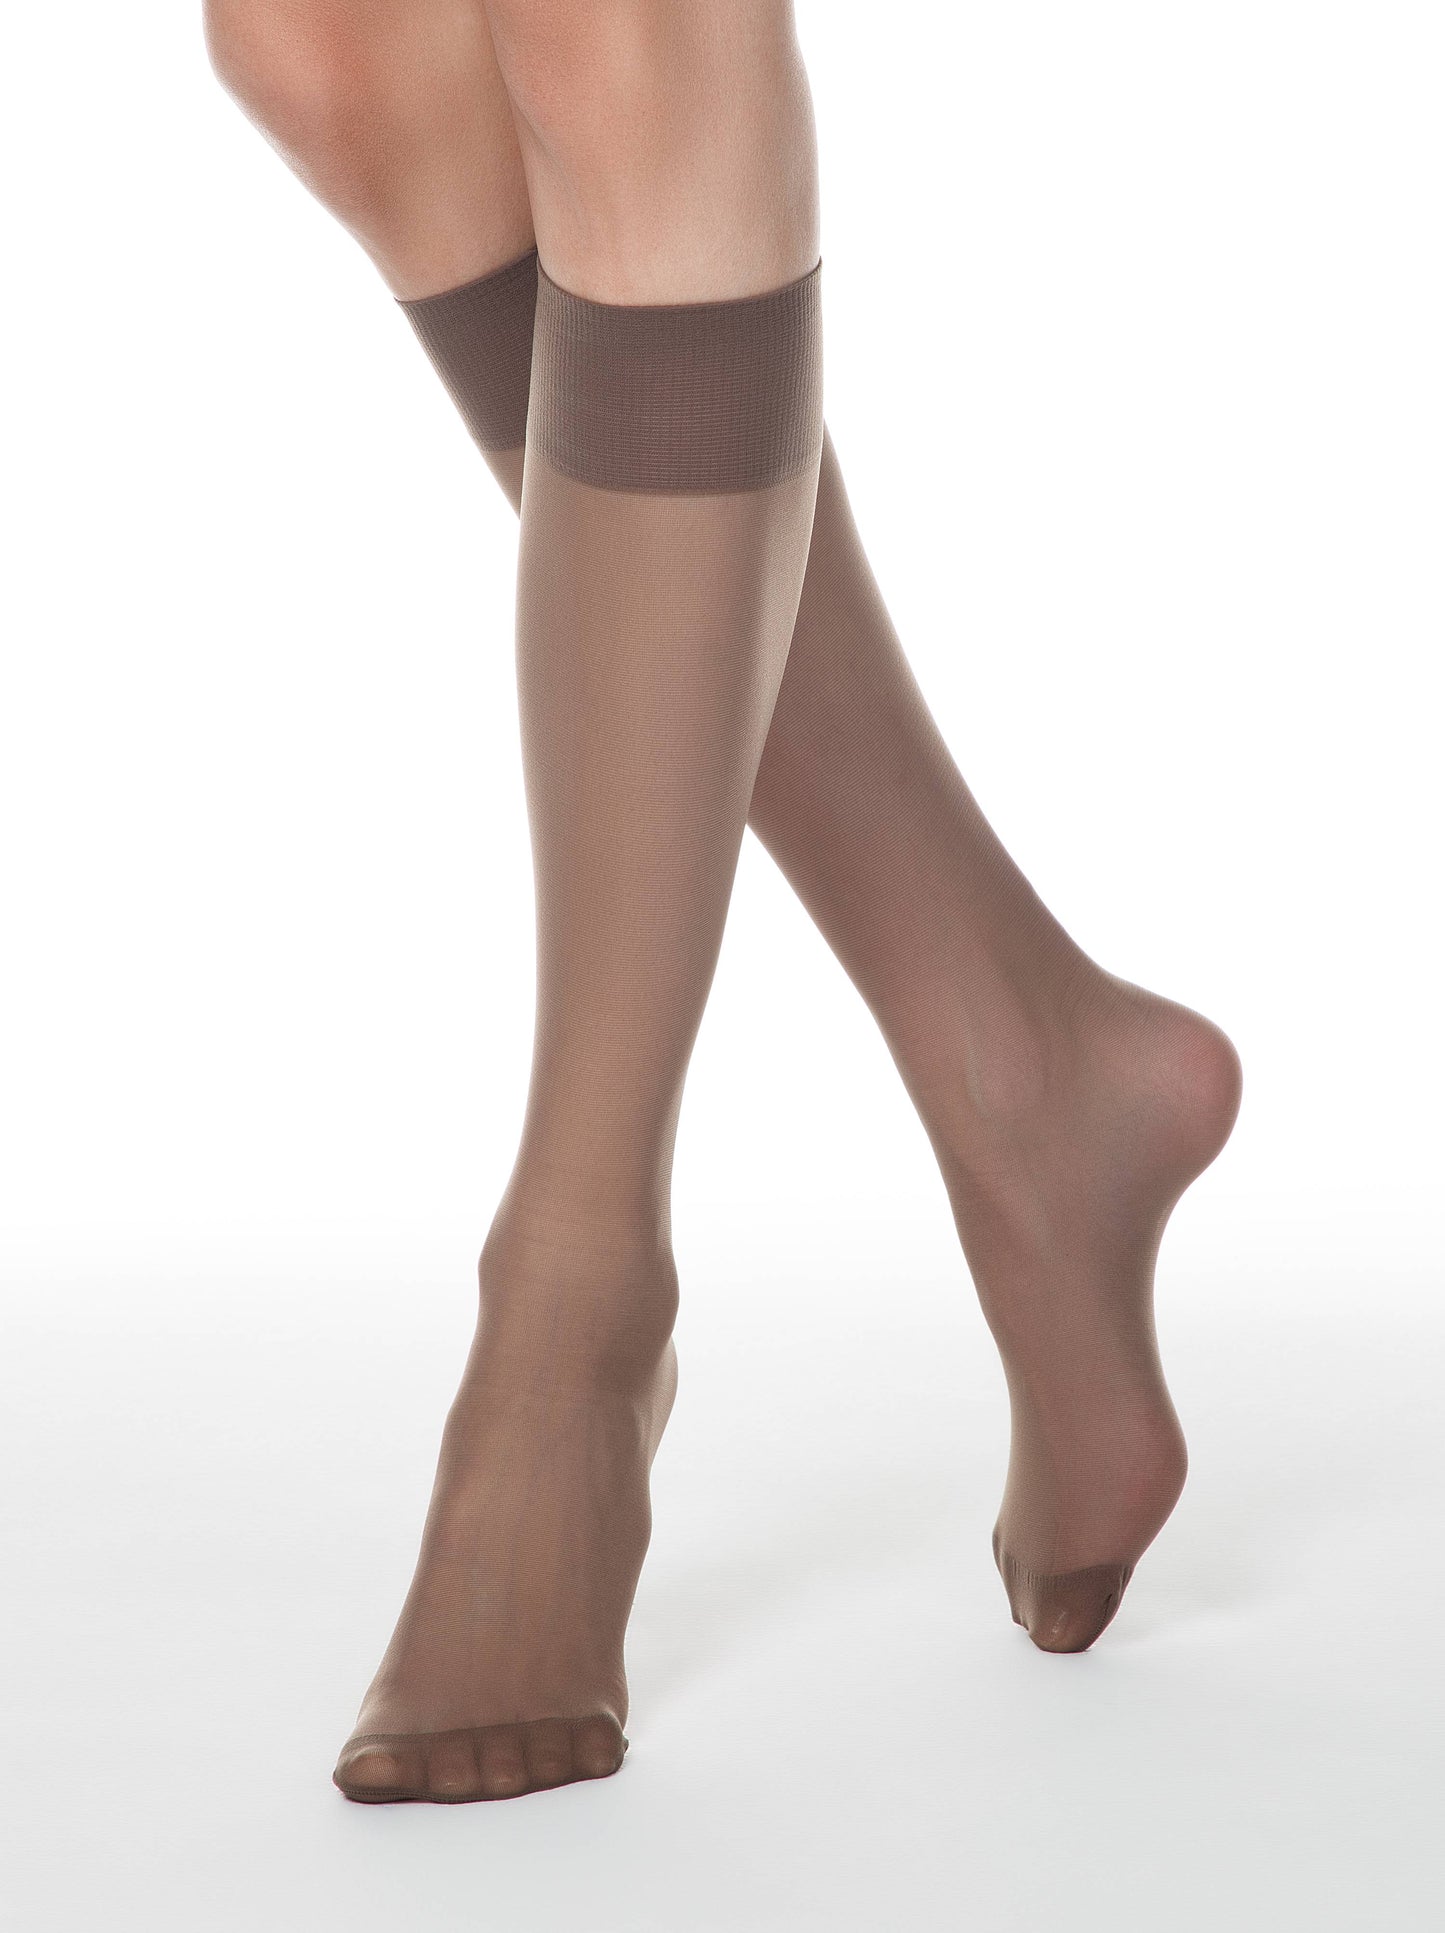 Conte/Esli Irise 20 Den - Thin Knee-Highs For Women - 2 Pairs (Pack) (14С-72СПЕ)